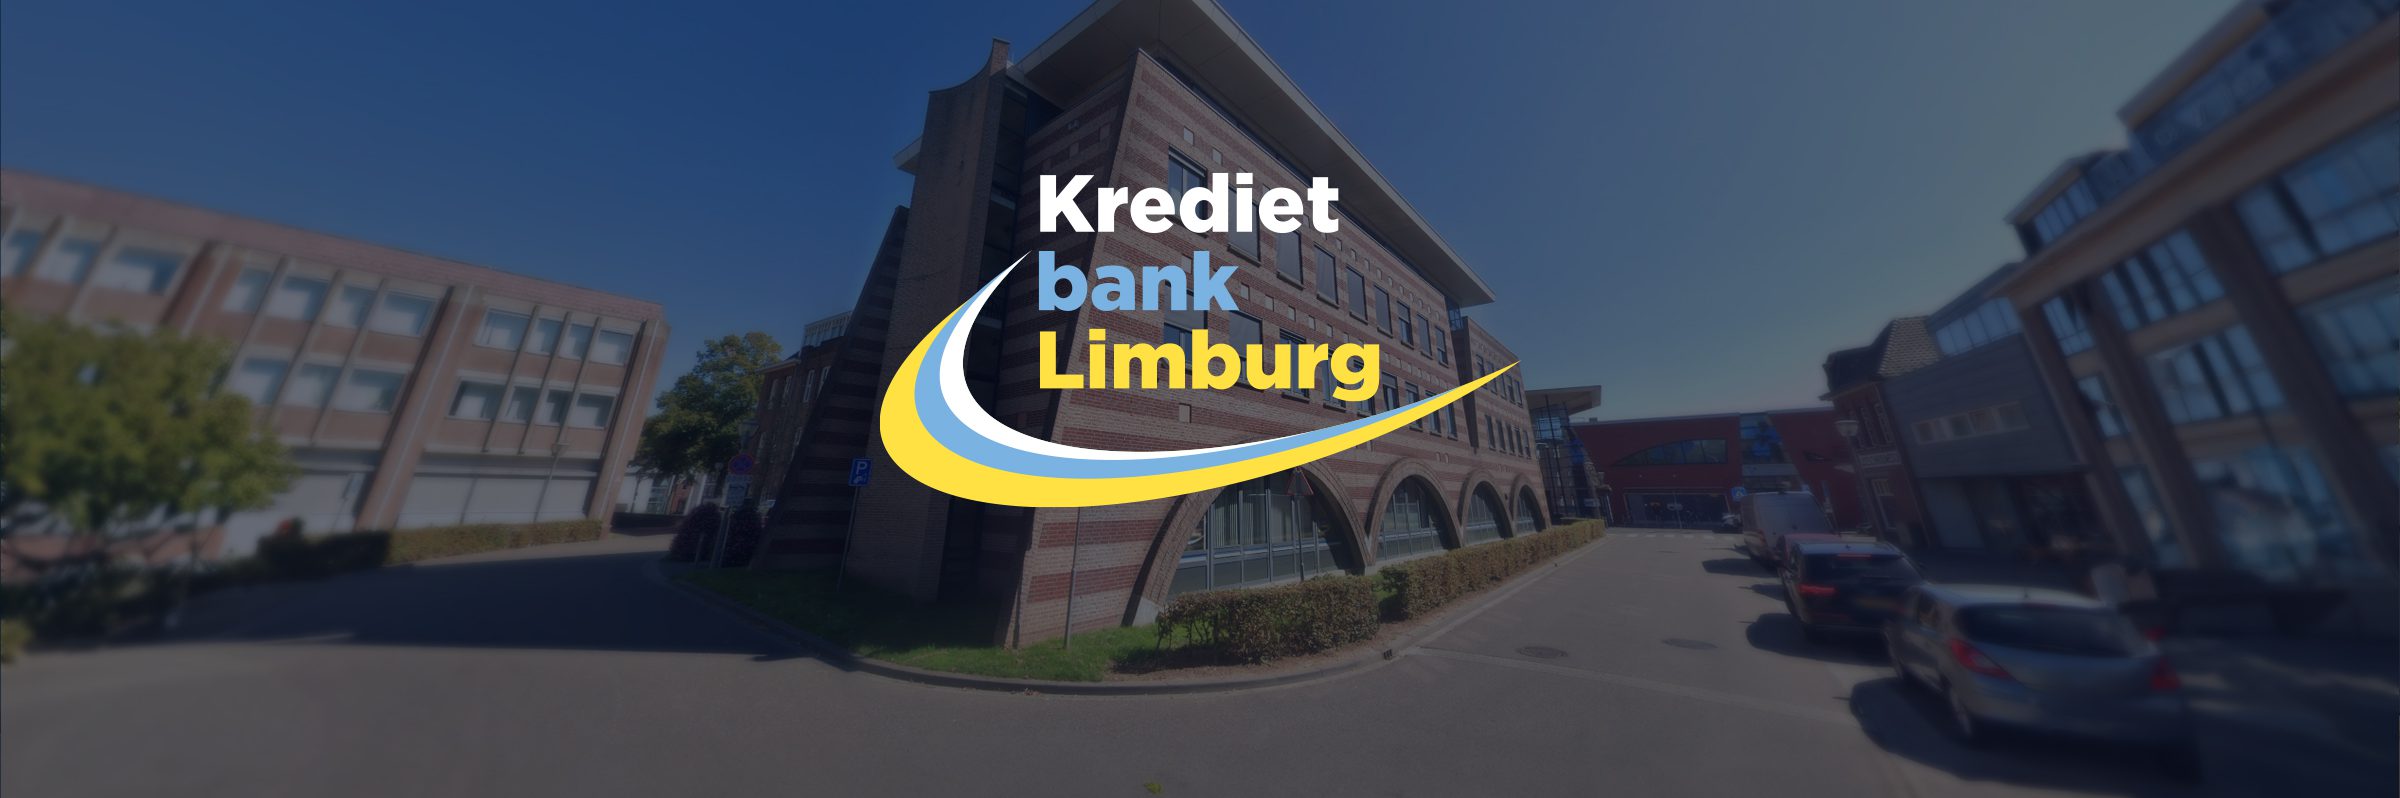 Interstellar_Kredietbank-Limburg-aspect-ratio-813-270